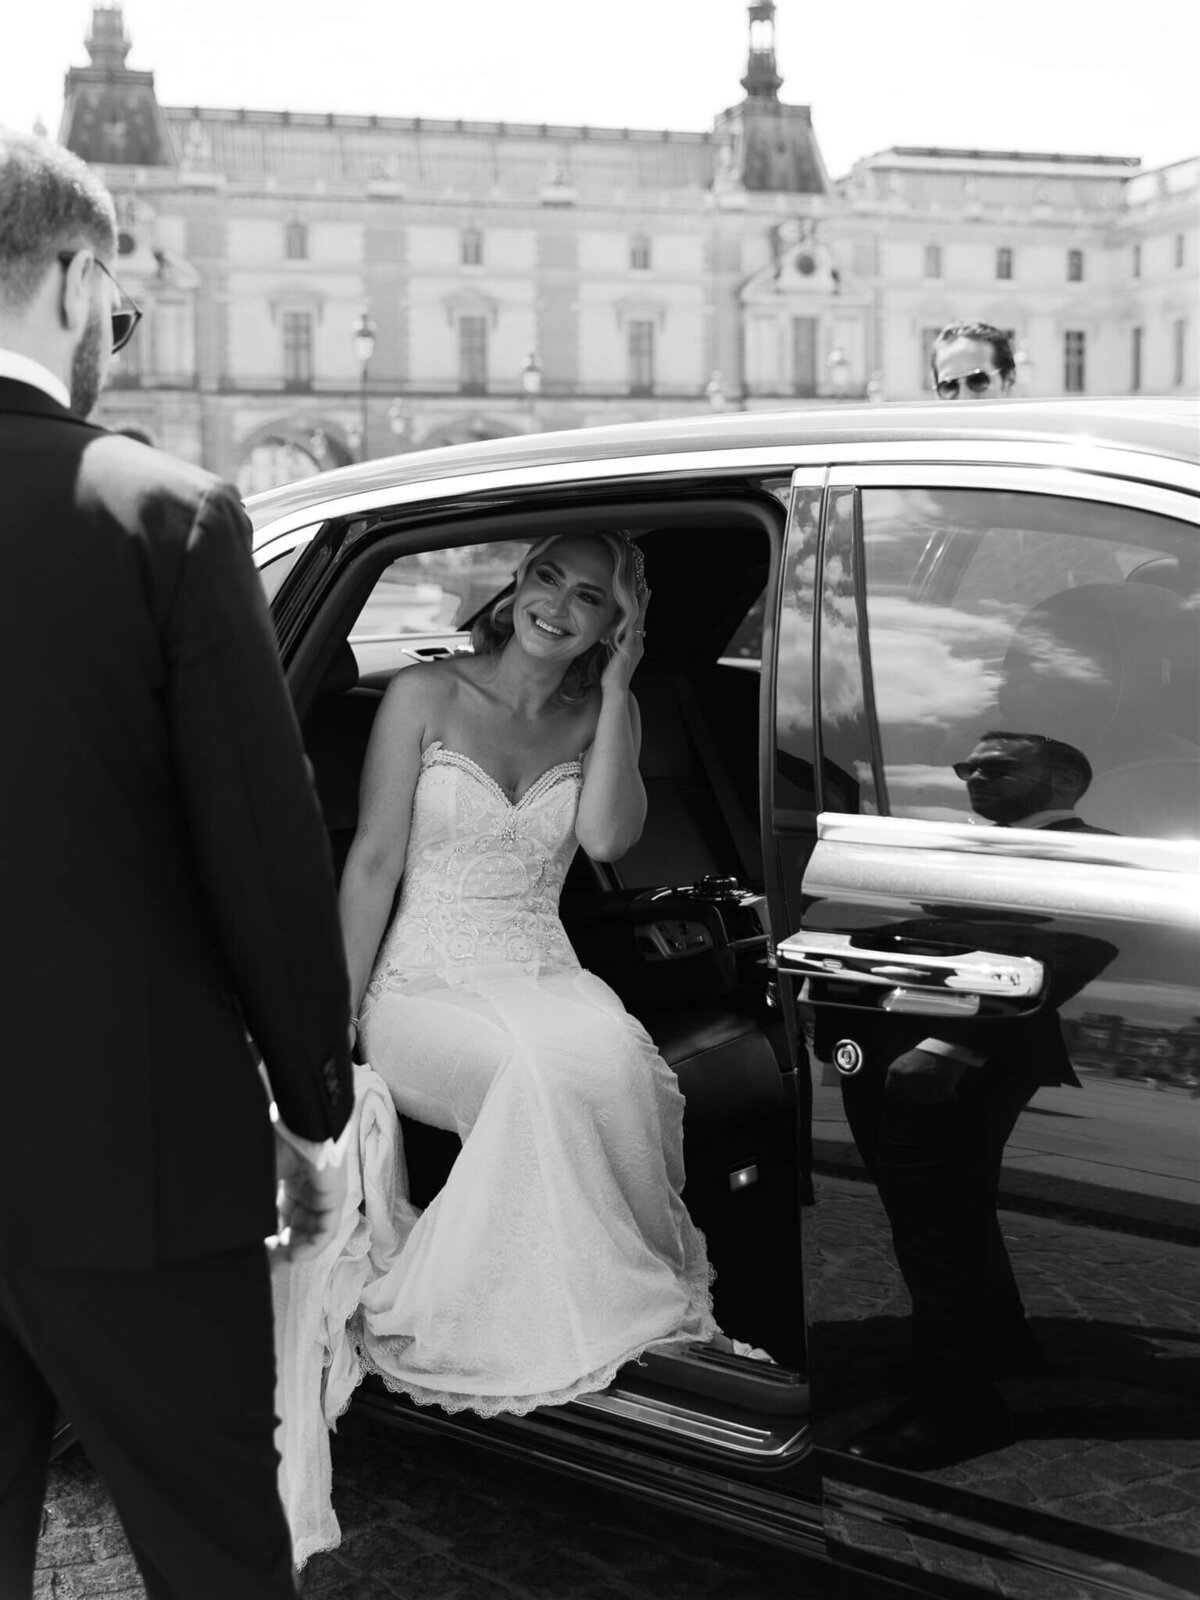 DianeSoteroPhotography_Wedding_StJamesHotel_HotelLeMarois_Paris_France_180